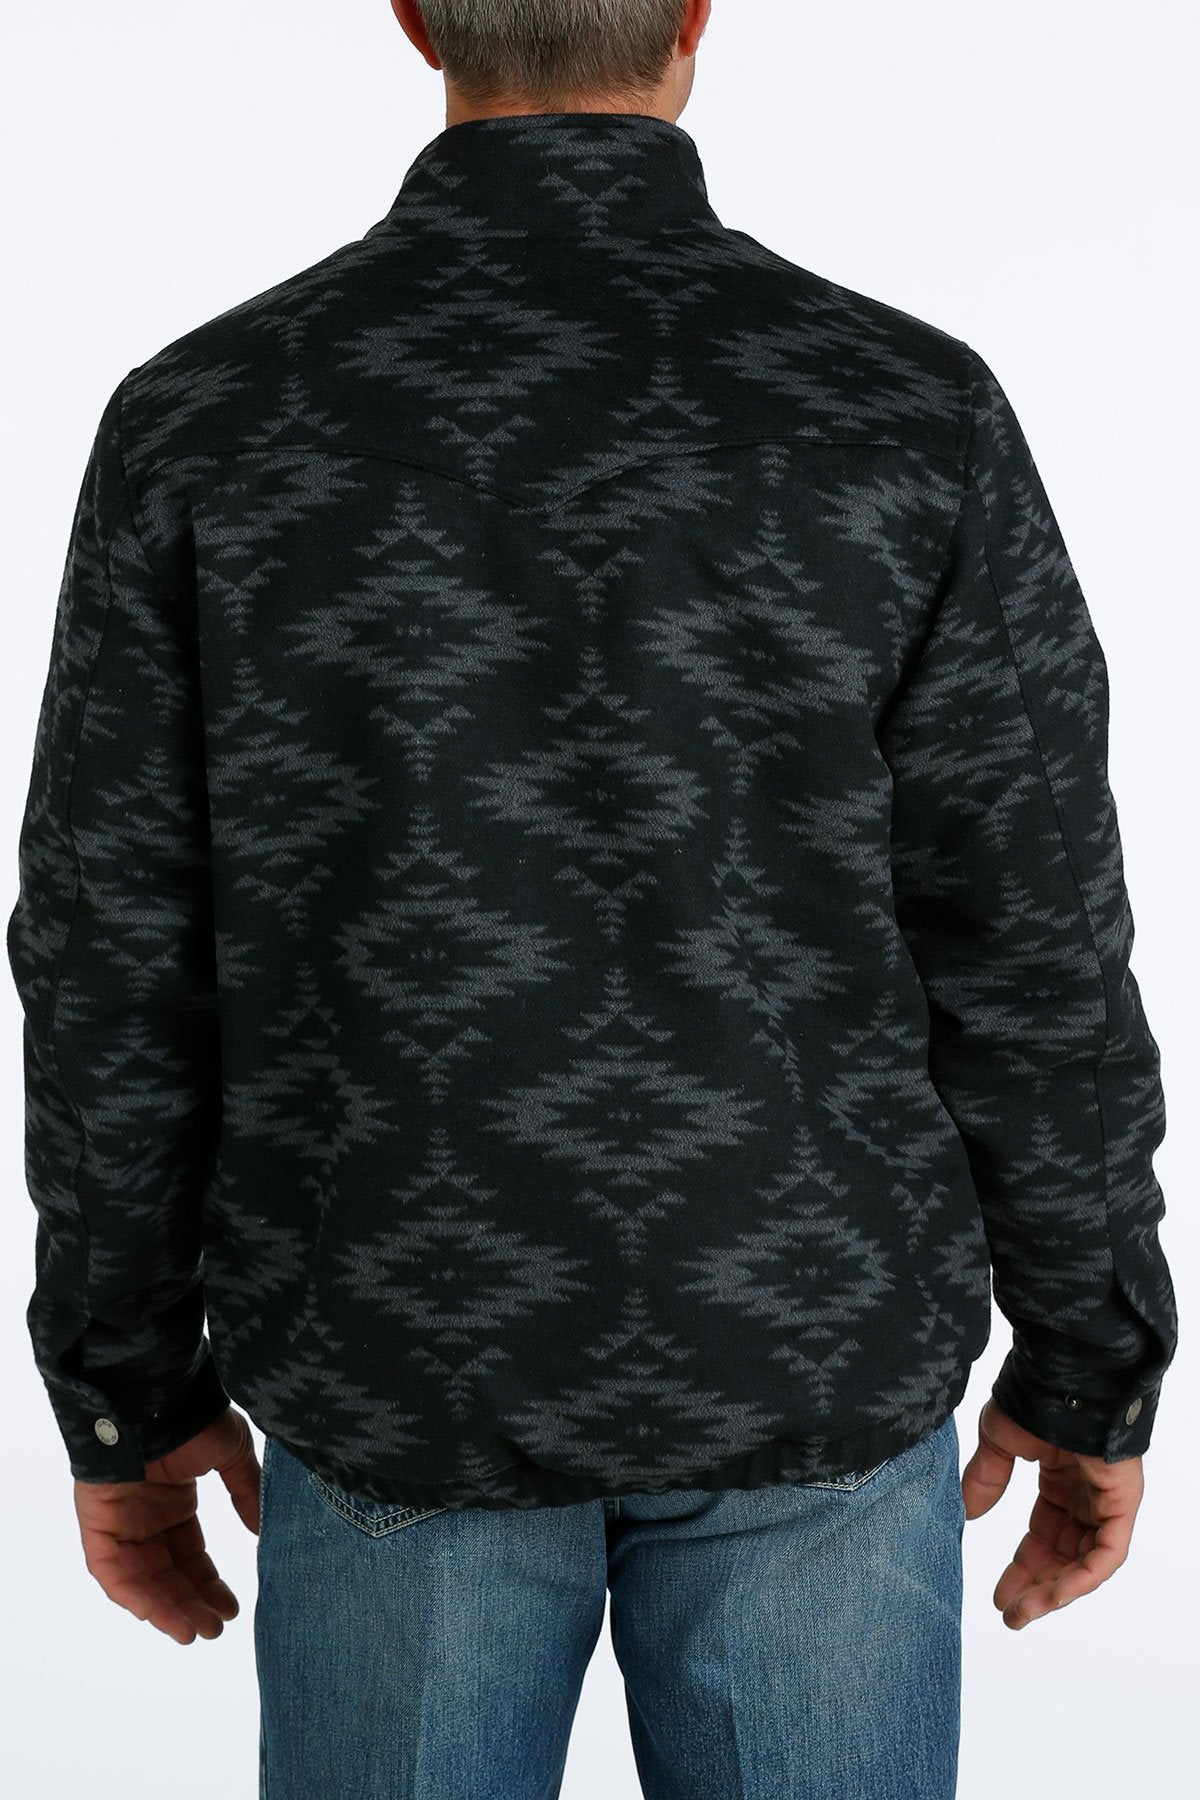 Cinch MWJ1590002 MNS Black Wooly Jacket